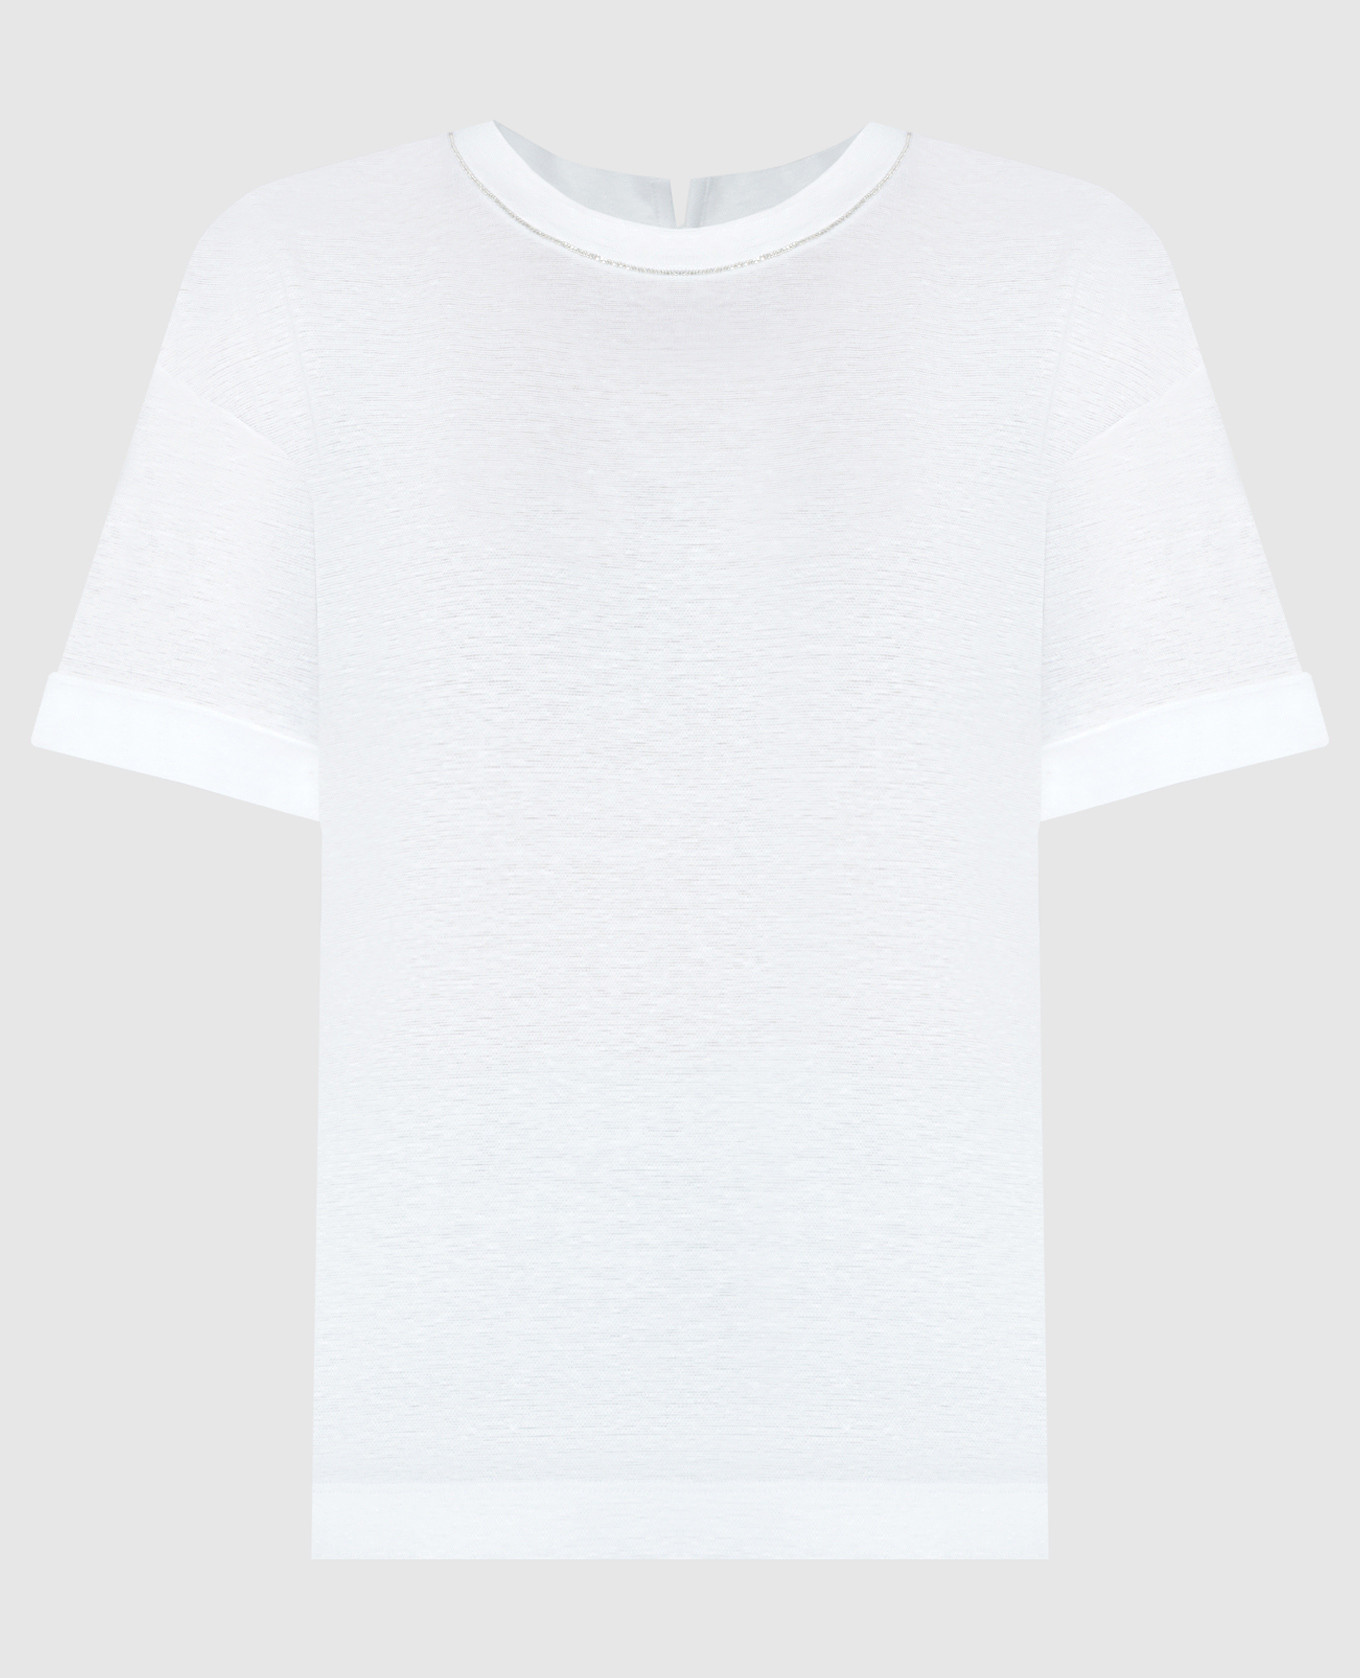 White linen t-shirt with monil chain